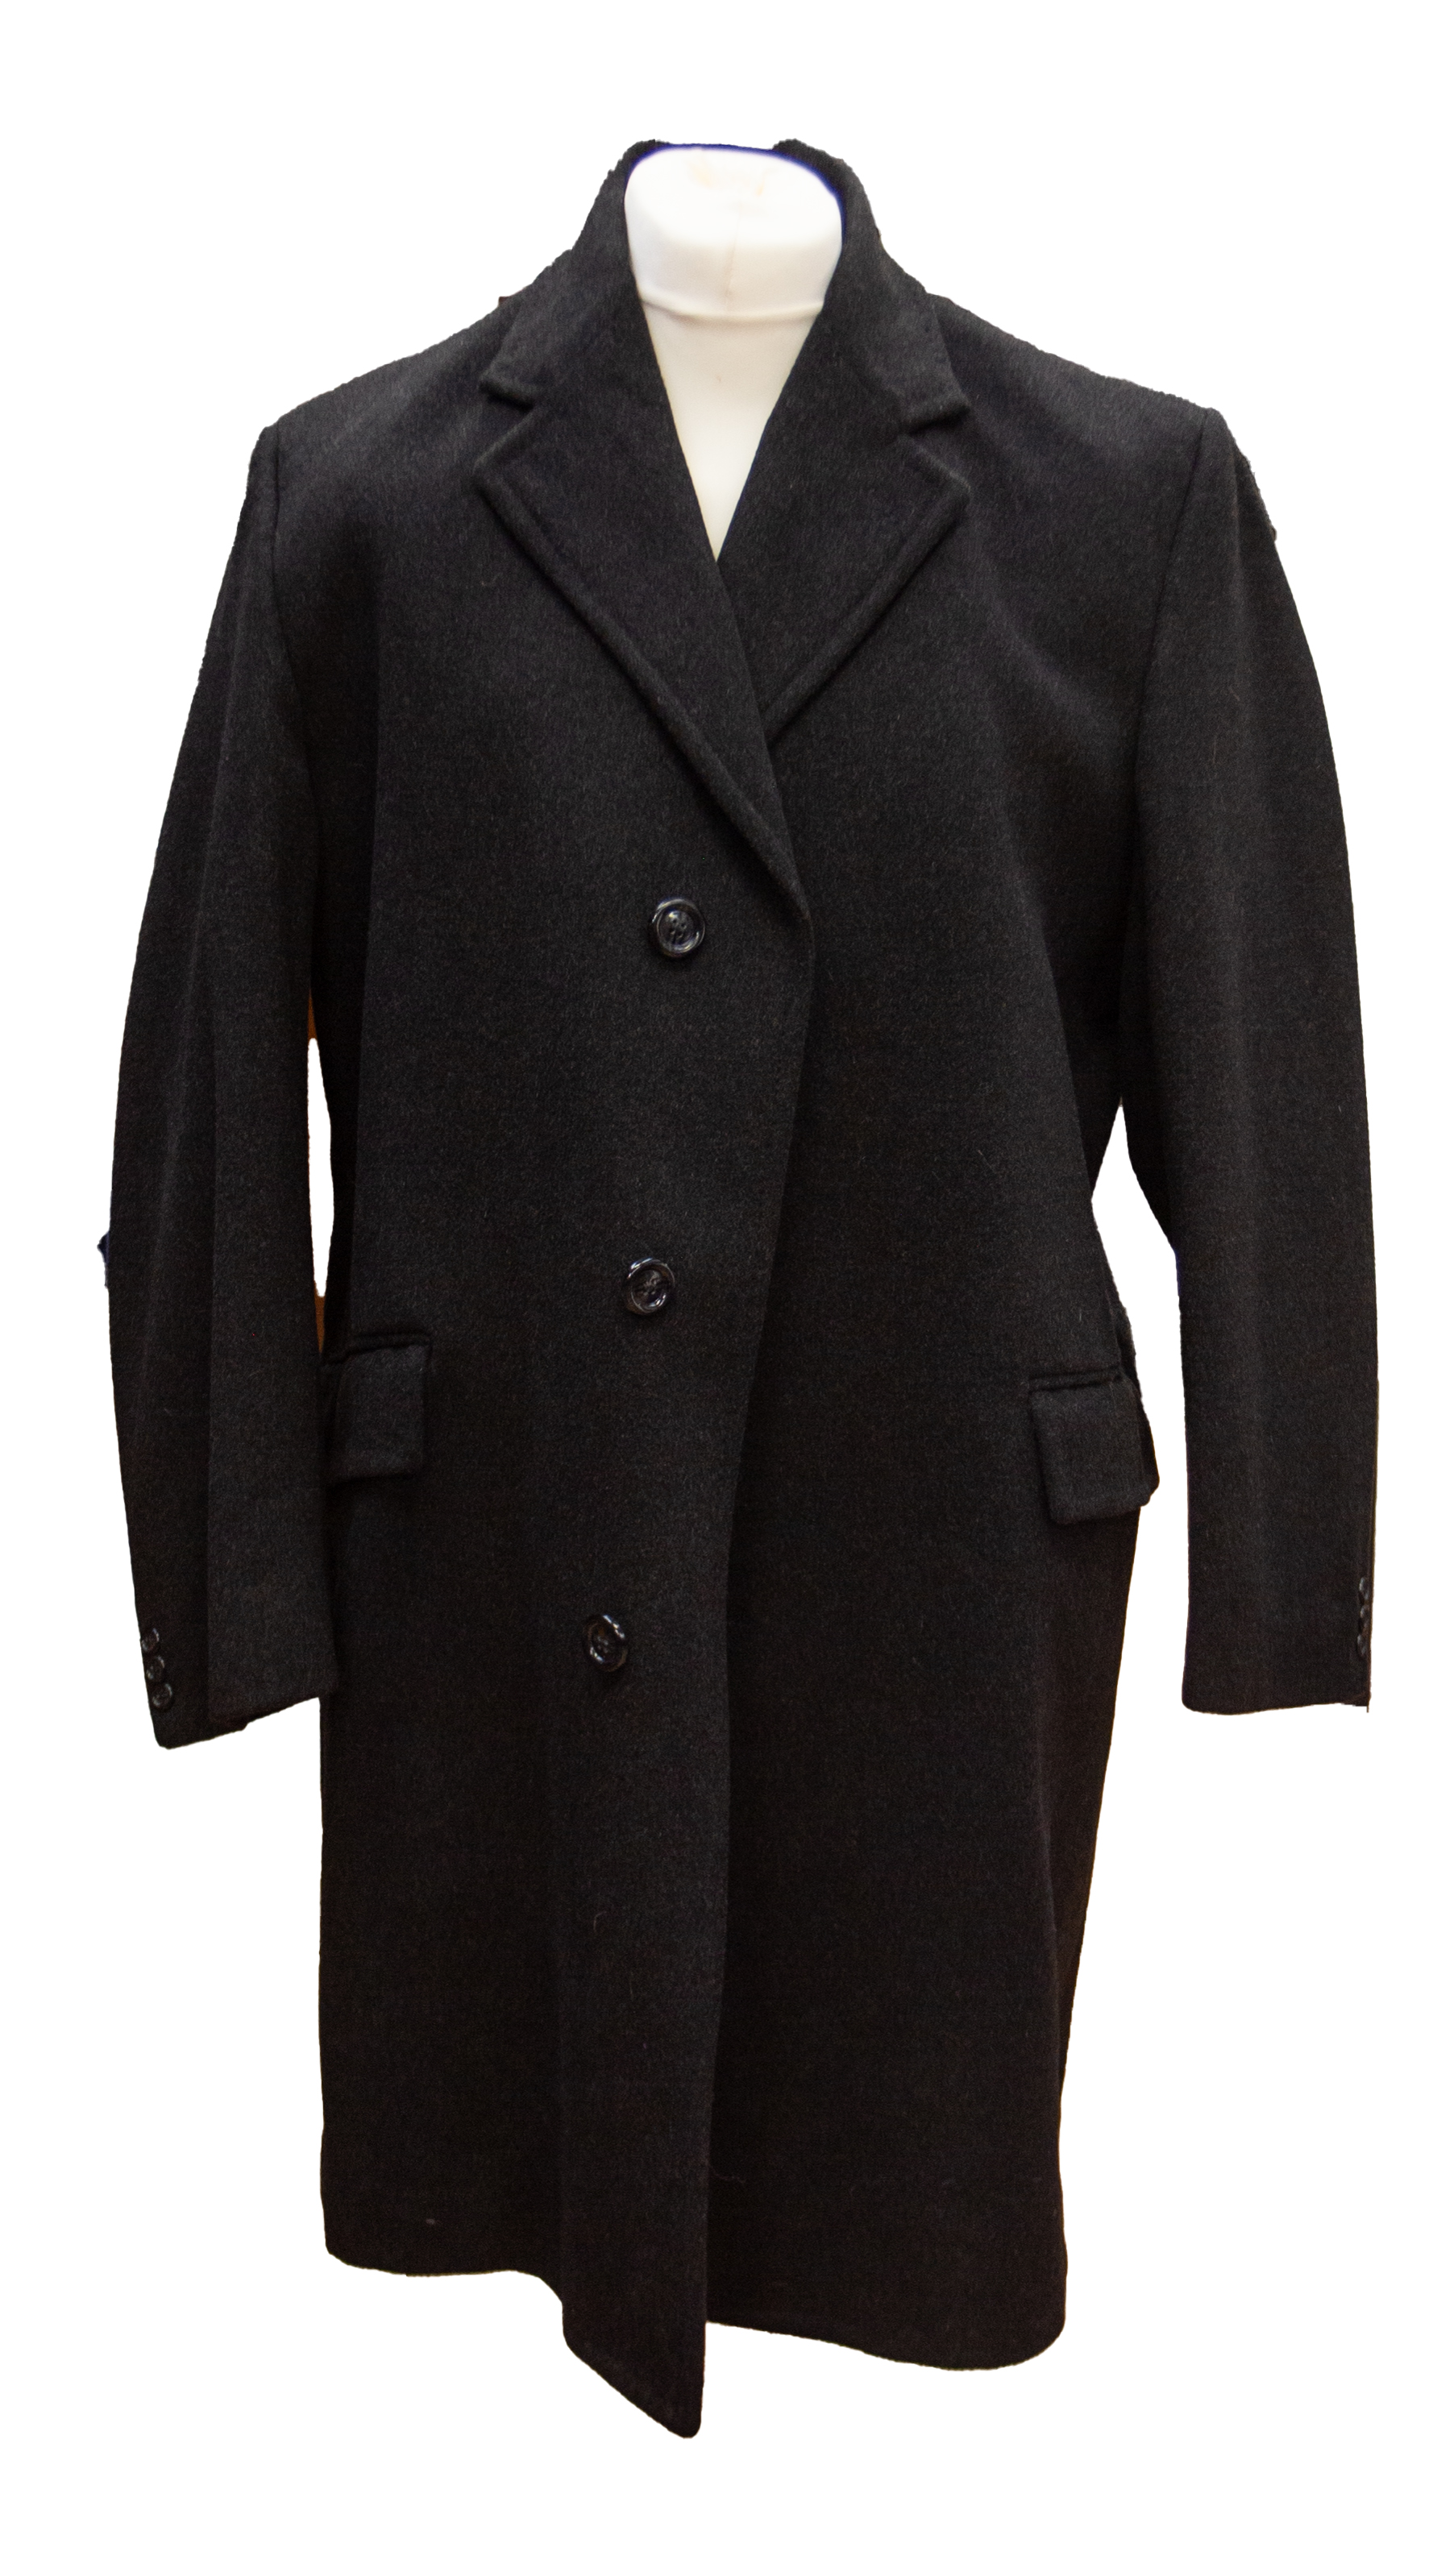 Dark grey Crombie overcoat in wool, made by Crombie in Aberdeen, late 1960s/early 1970s, fully